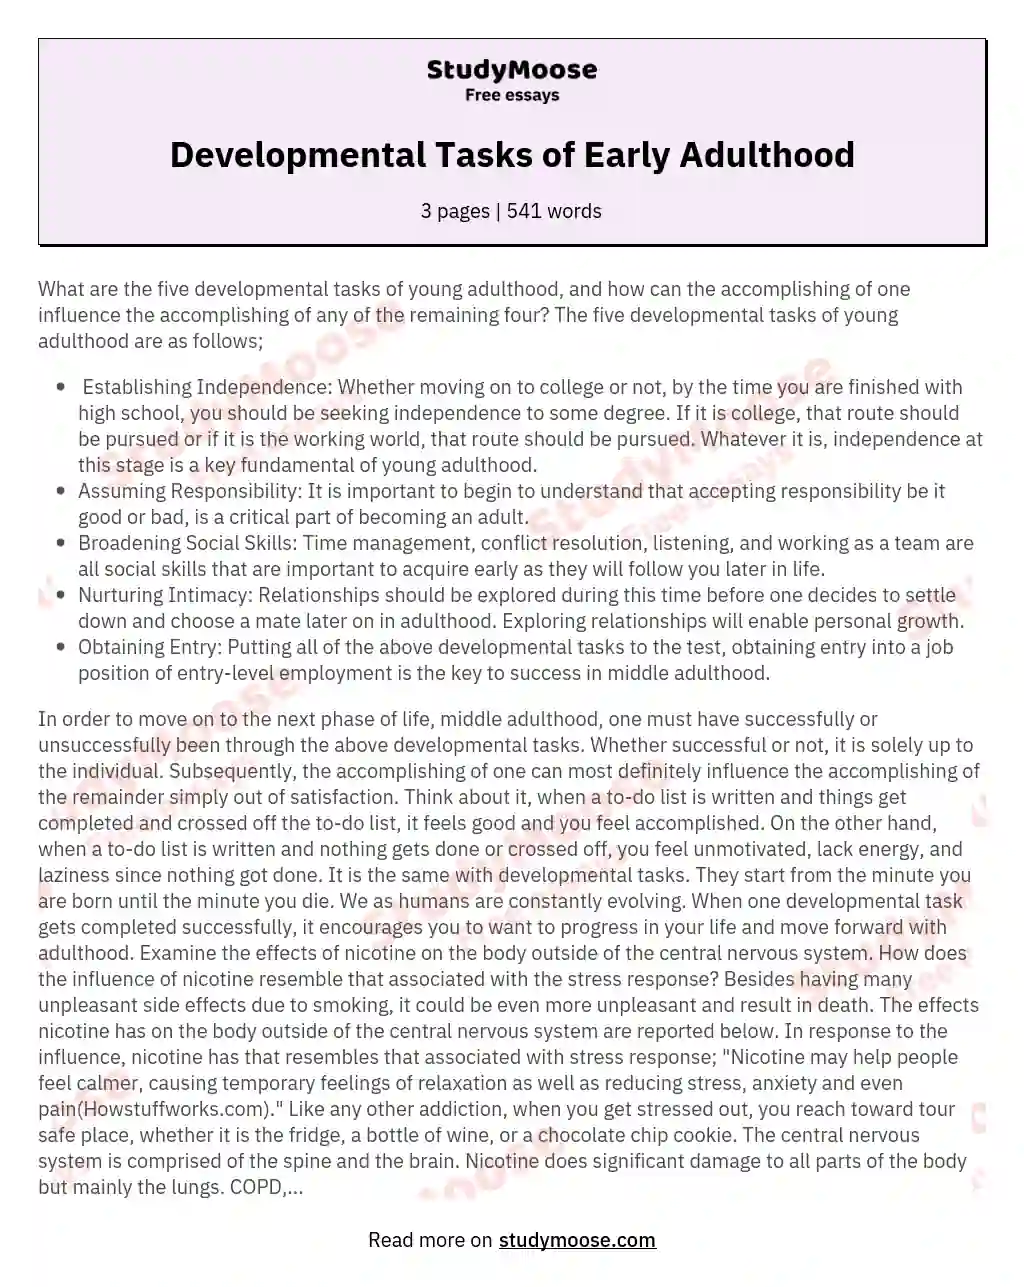 Developmental Tasks of Early Adulthood